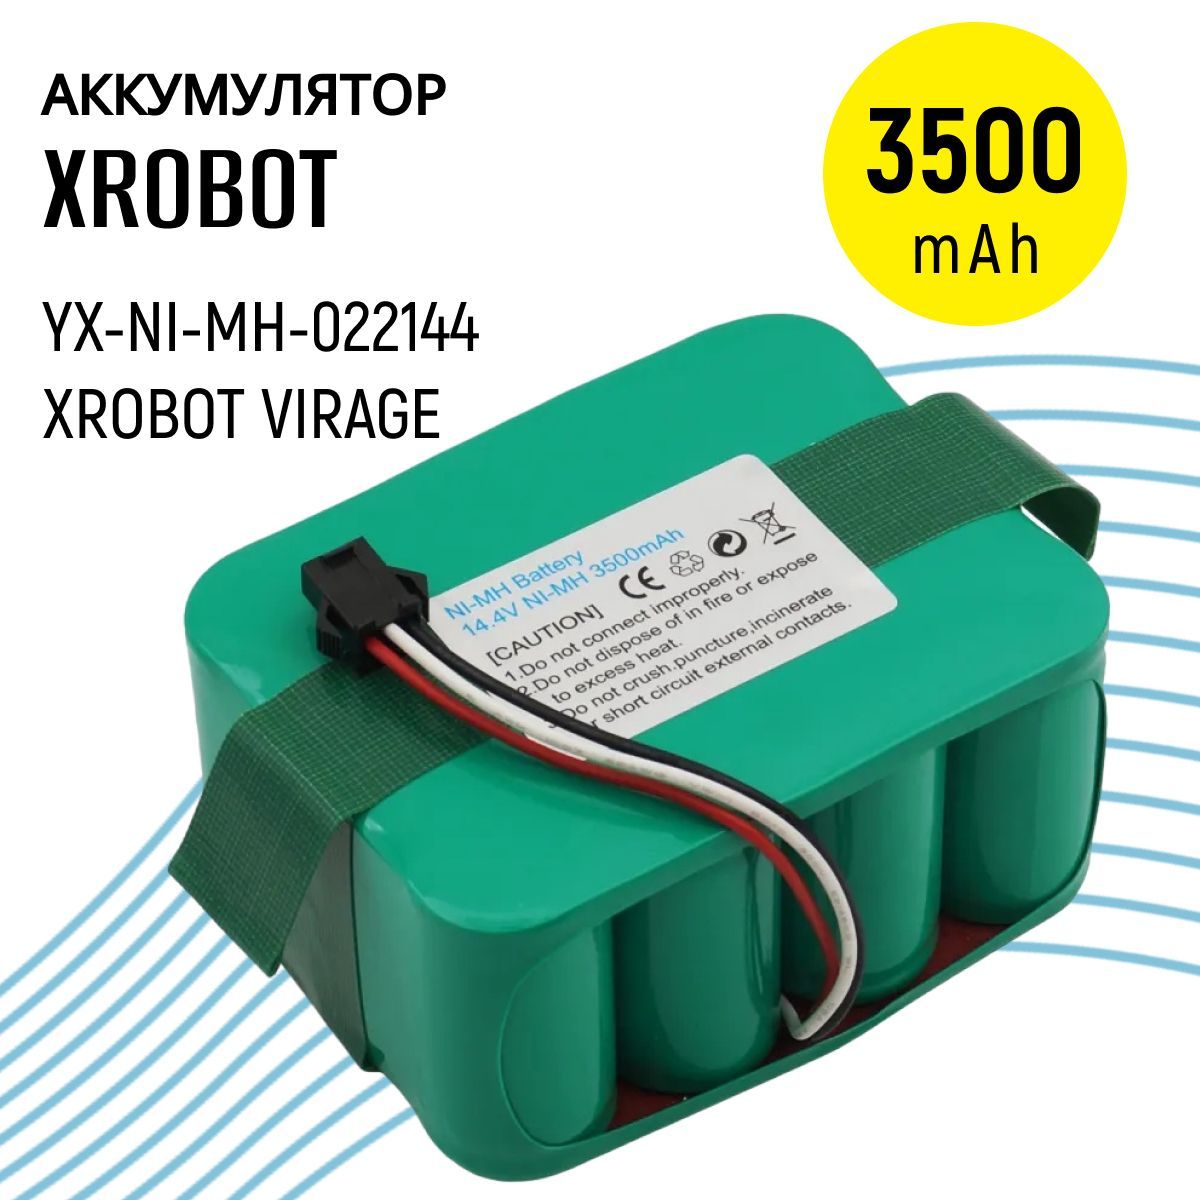 АккумуляторYX-Ni-MH-022144дляпылесосаXrobotXR-510,XR-210,CLEVERCLEANZ-Series,Helper,Virage(14.4V,3500mAh)